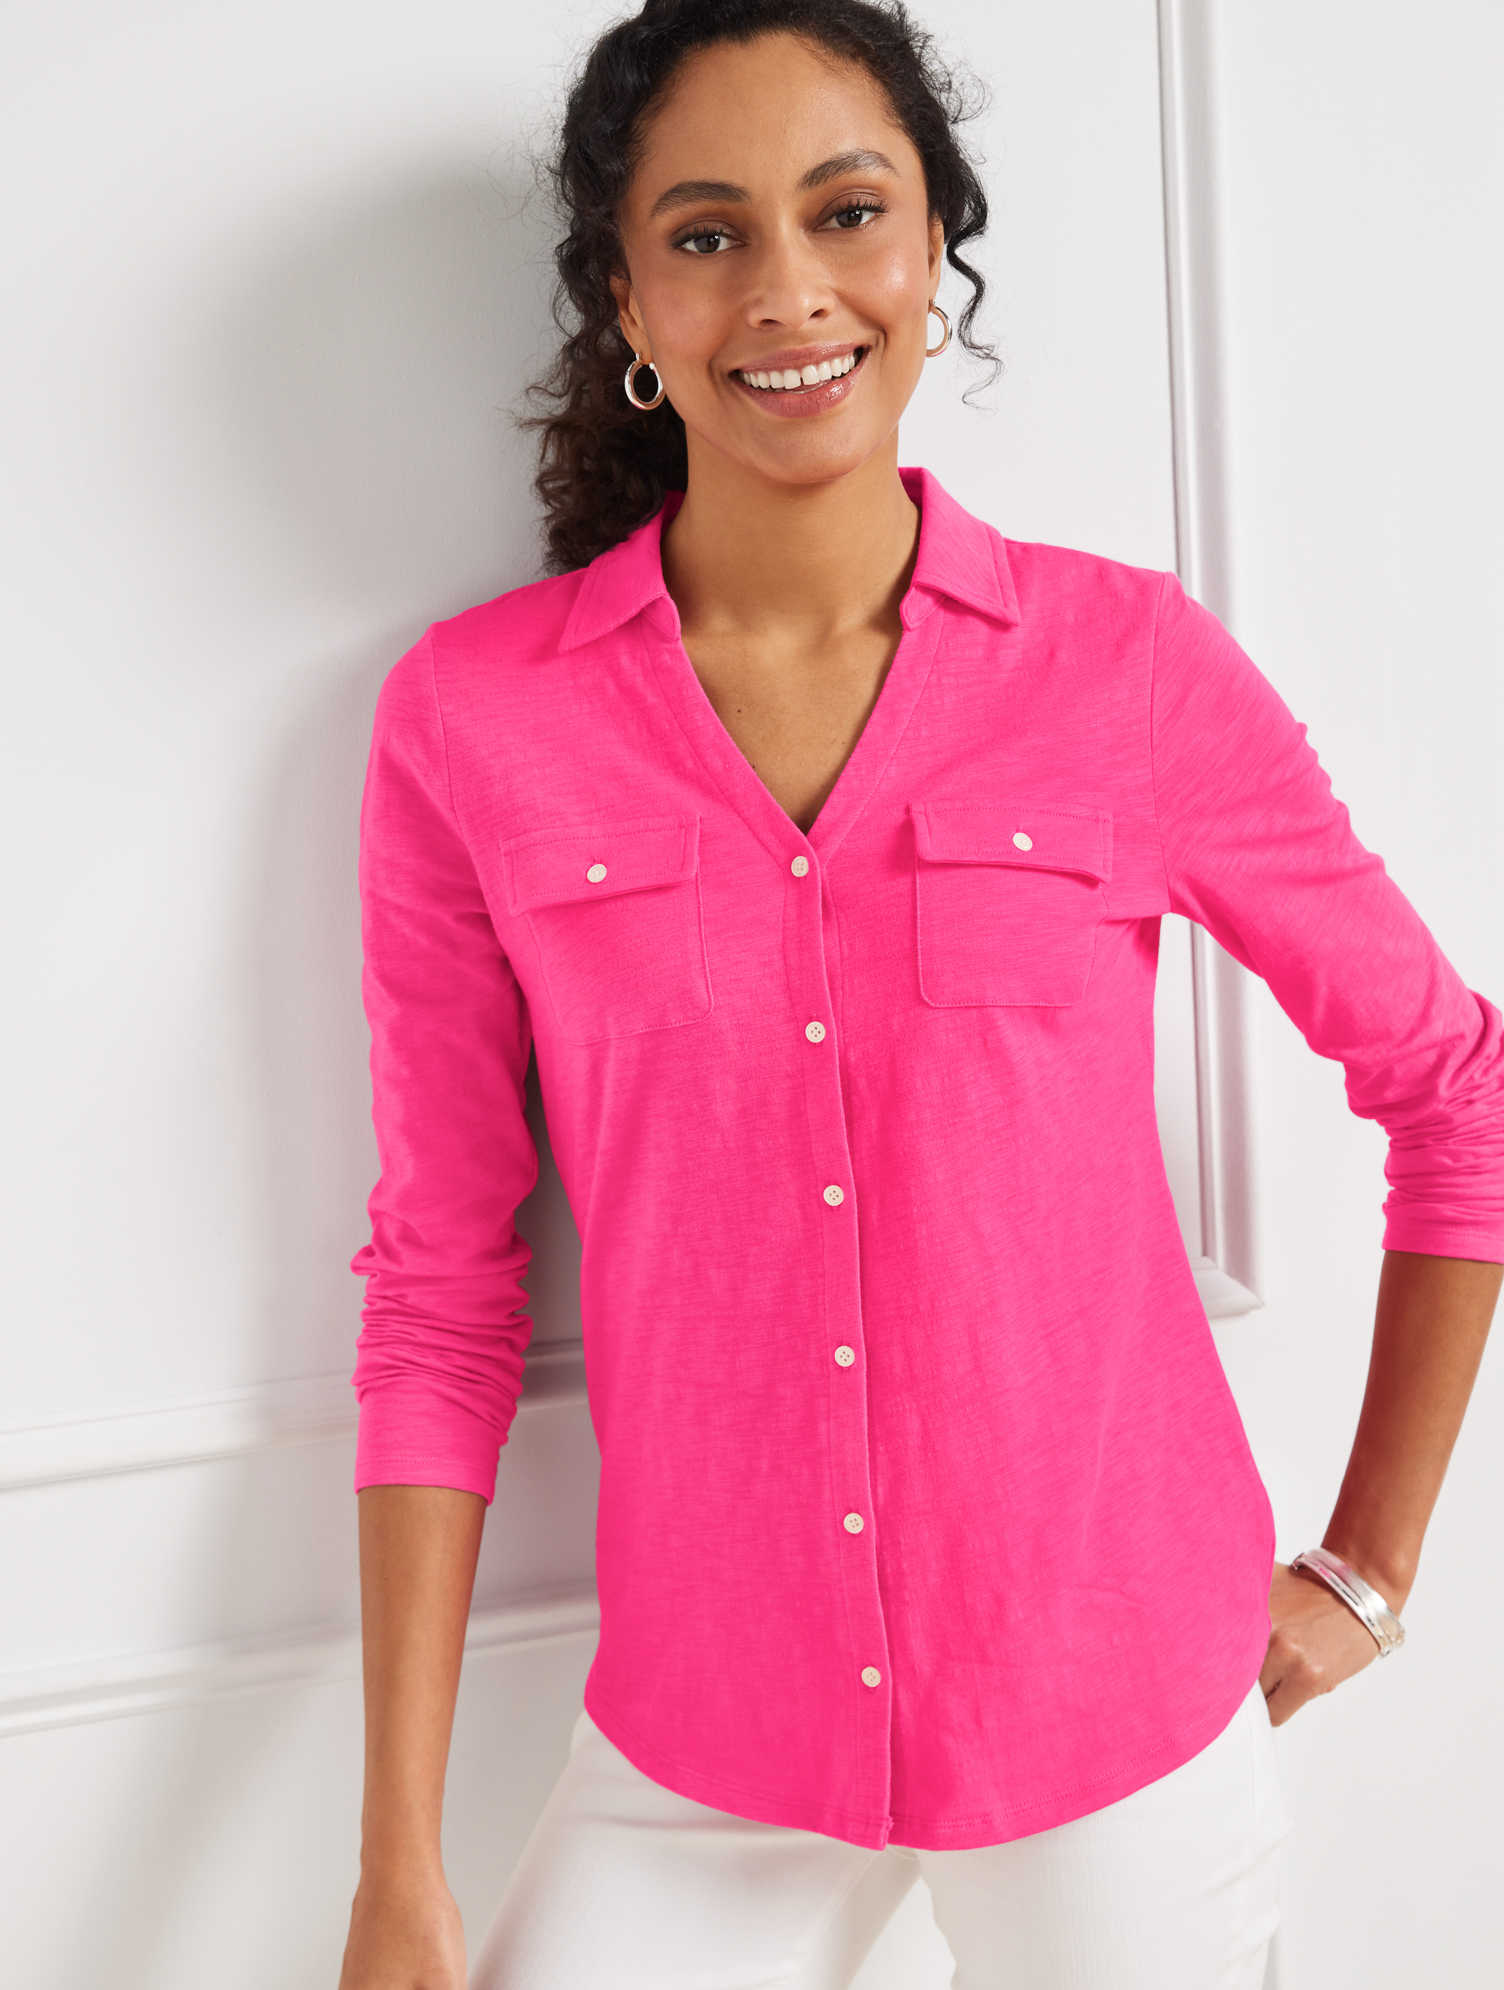 Talbots Knit Button Front Shirt - Vivid Pink - Xl - 100% Cotton